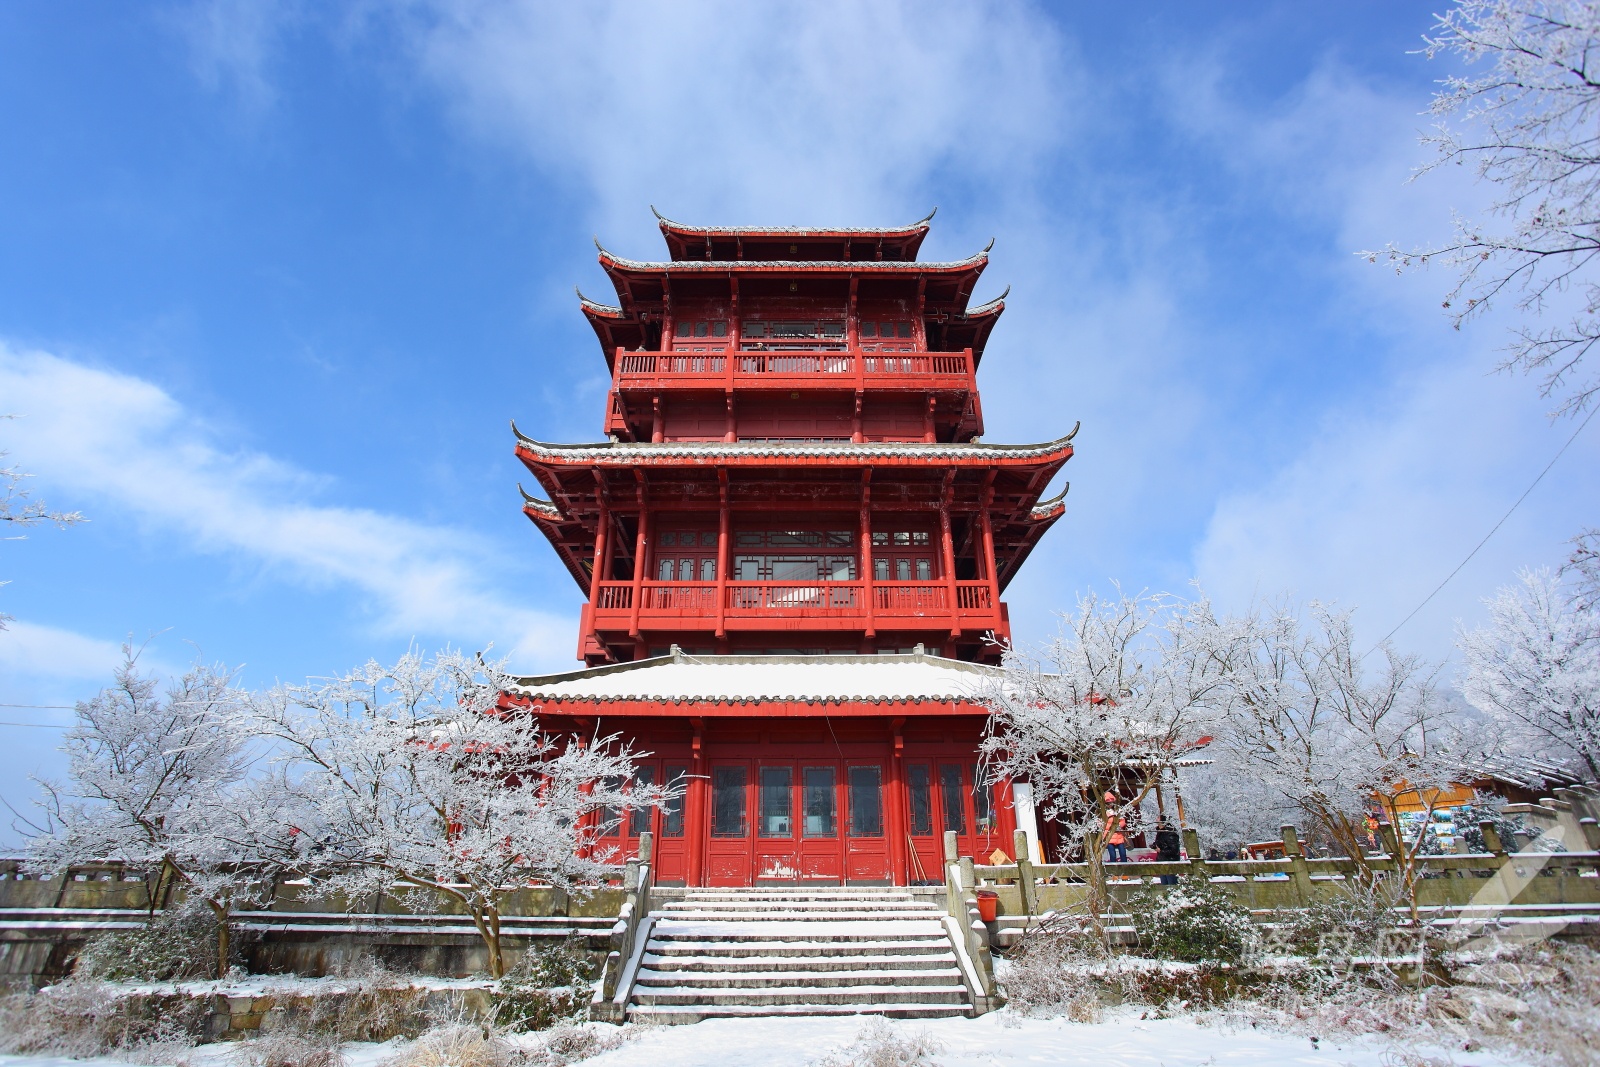 Tianzi Pavilion offers a panoramic view of Tianzi Mountain area